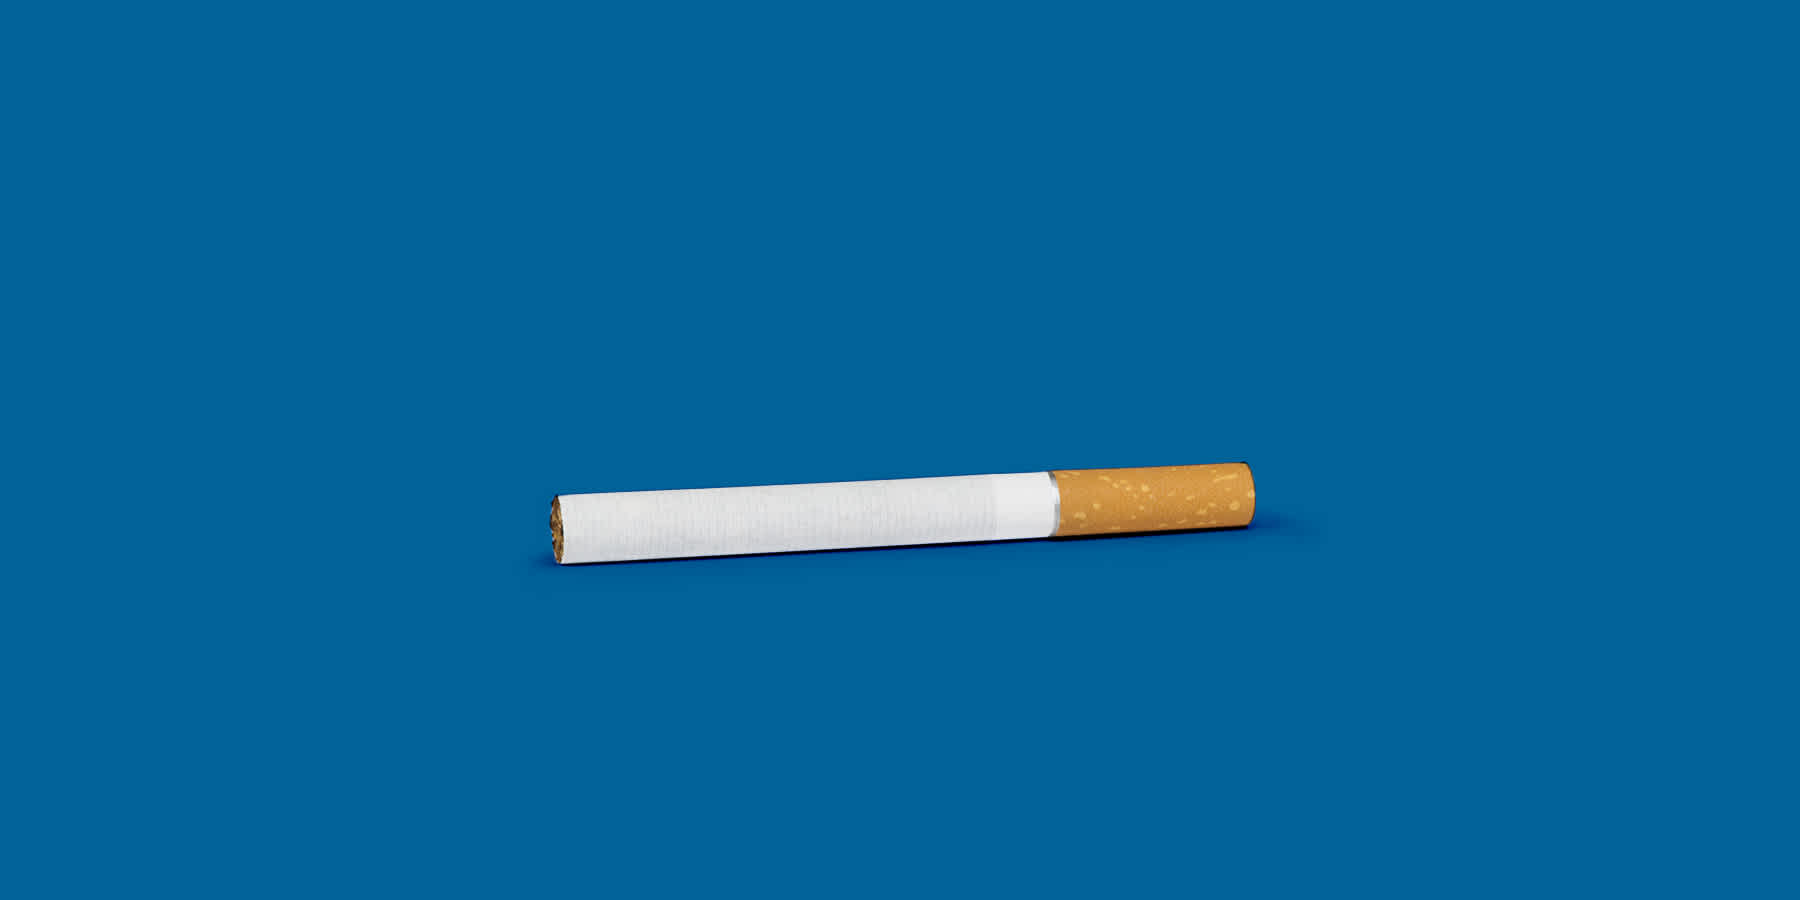 Cigarette against a blue background that can affect women's hormones